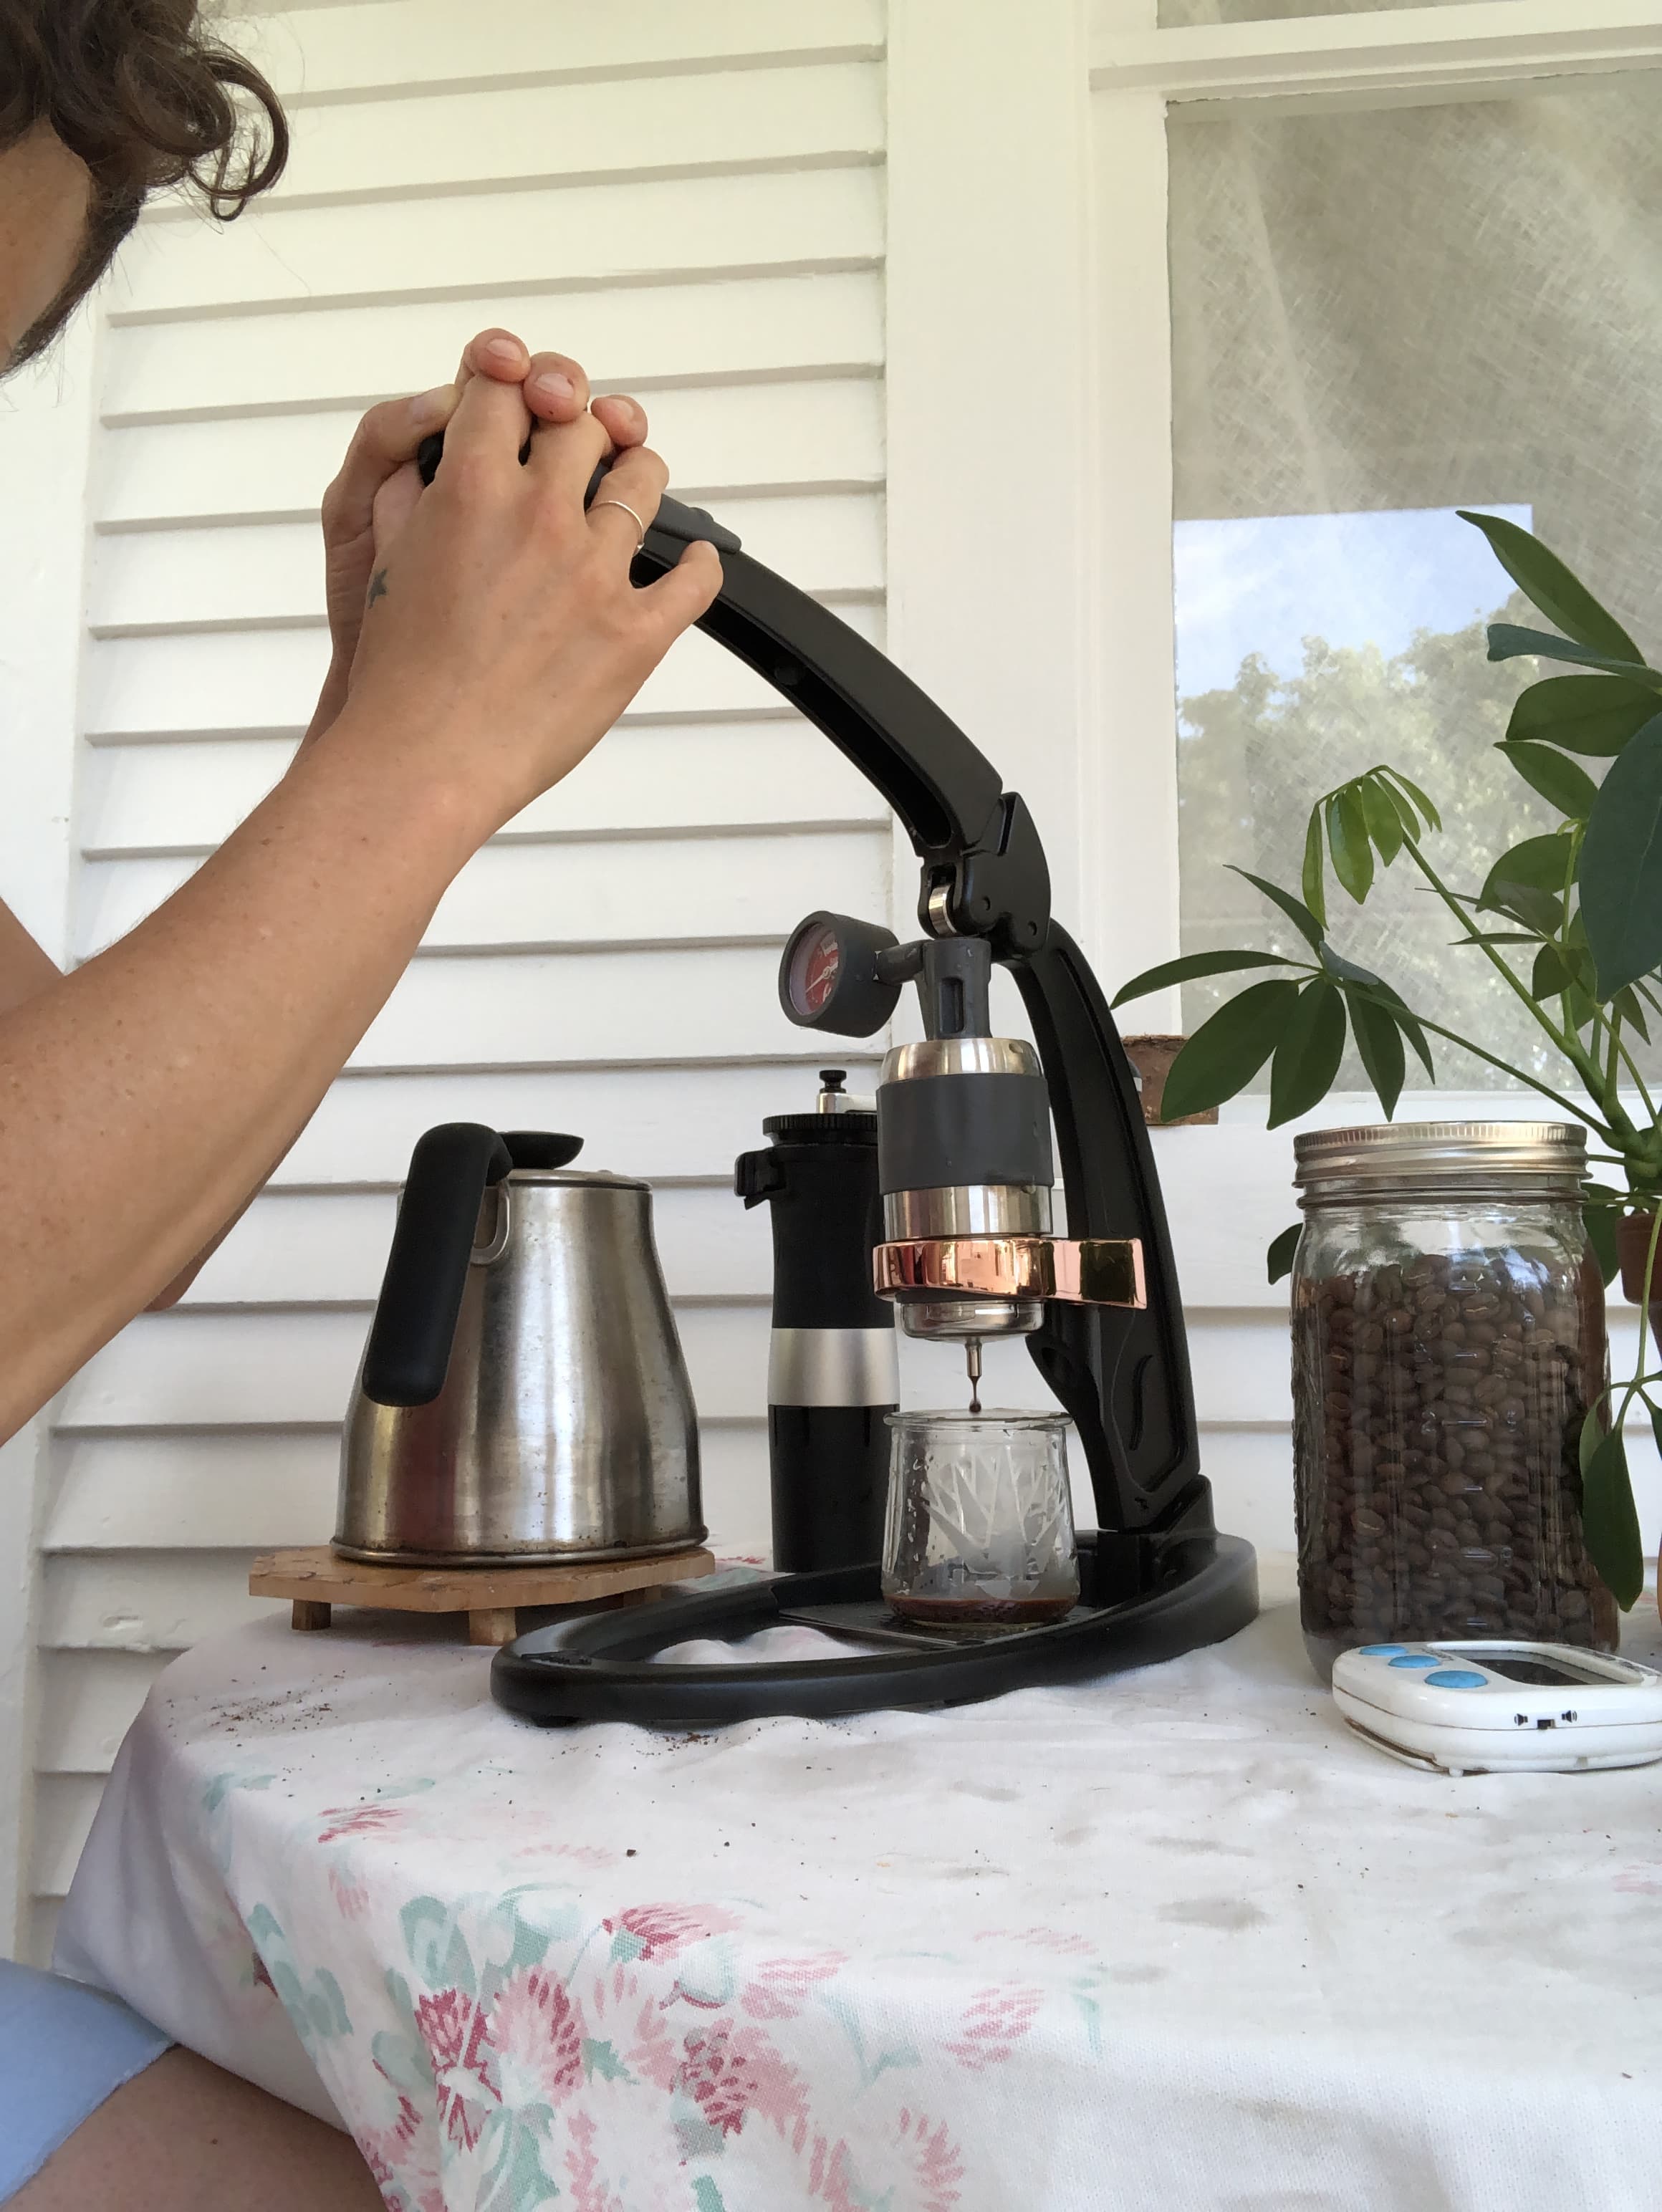 Flow Tip Milk Jug - Flair Espresso